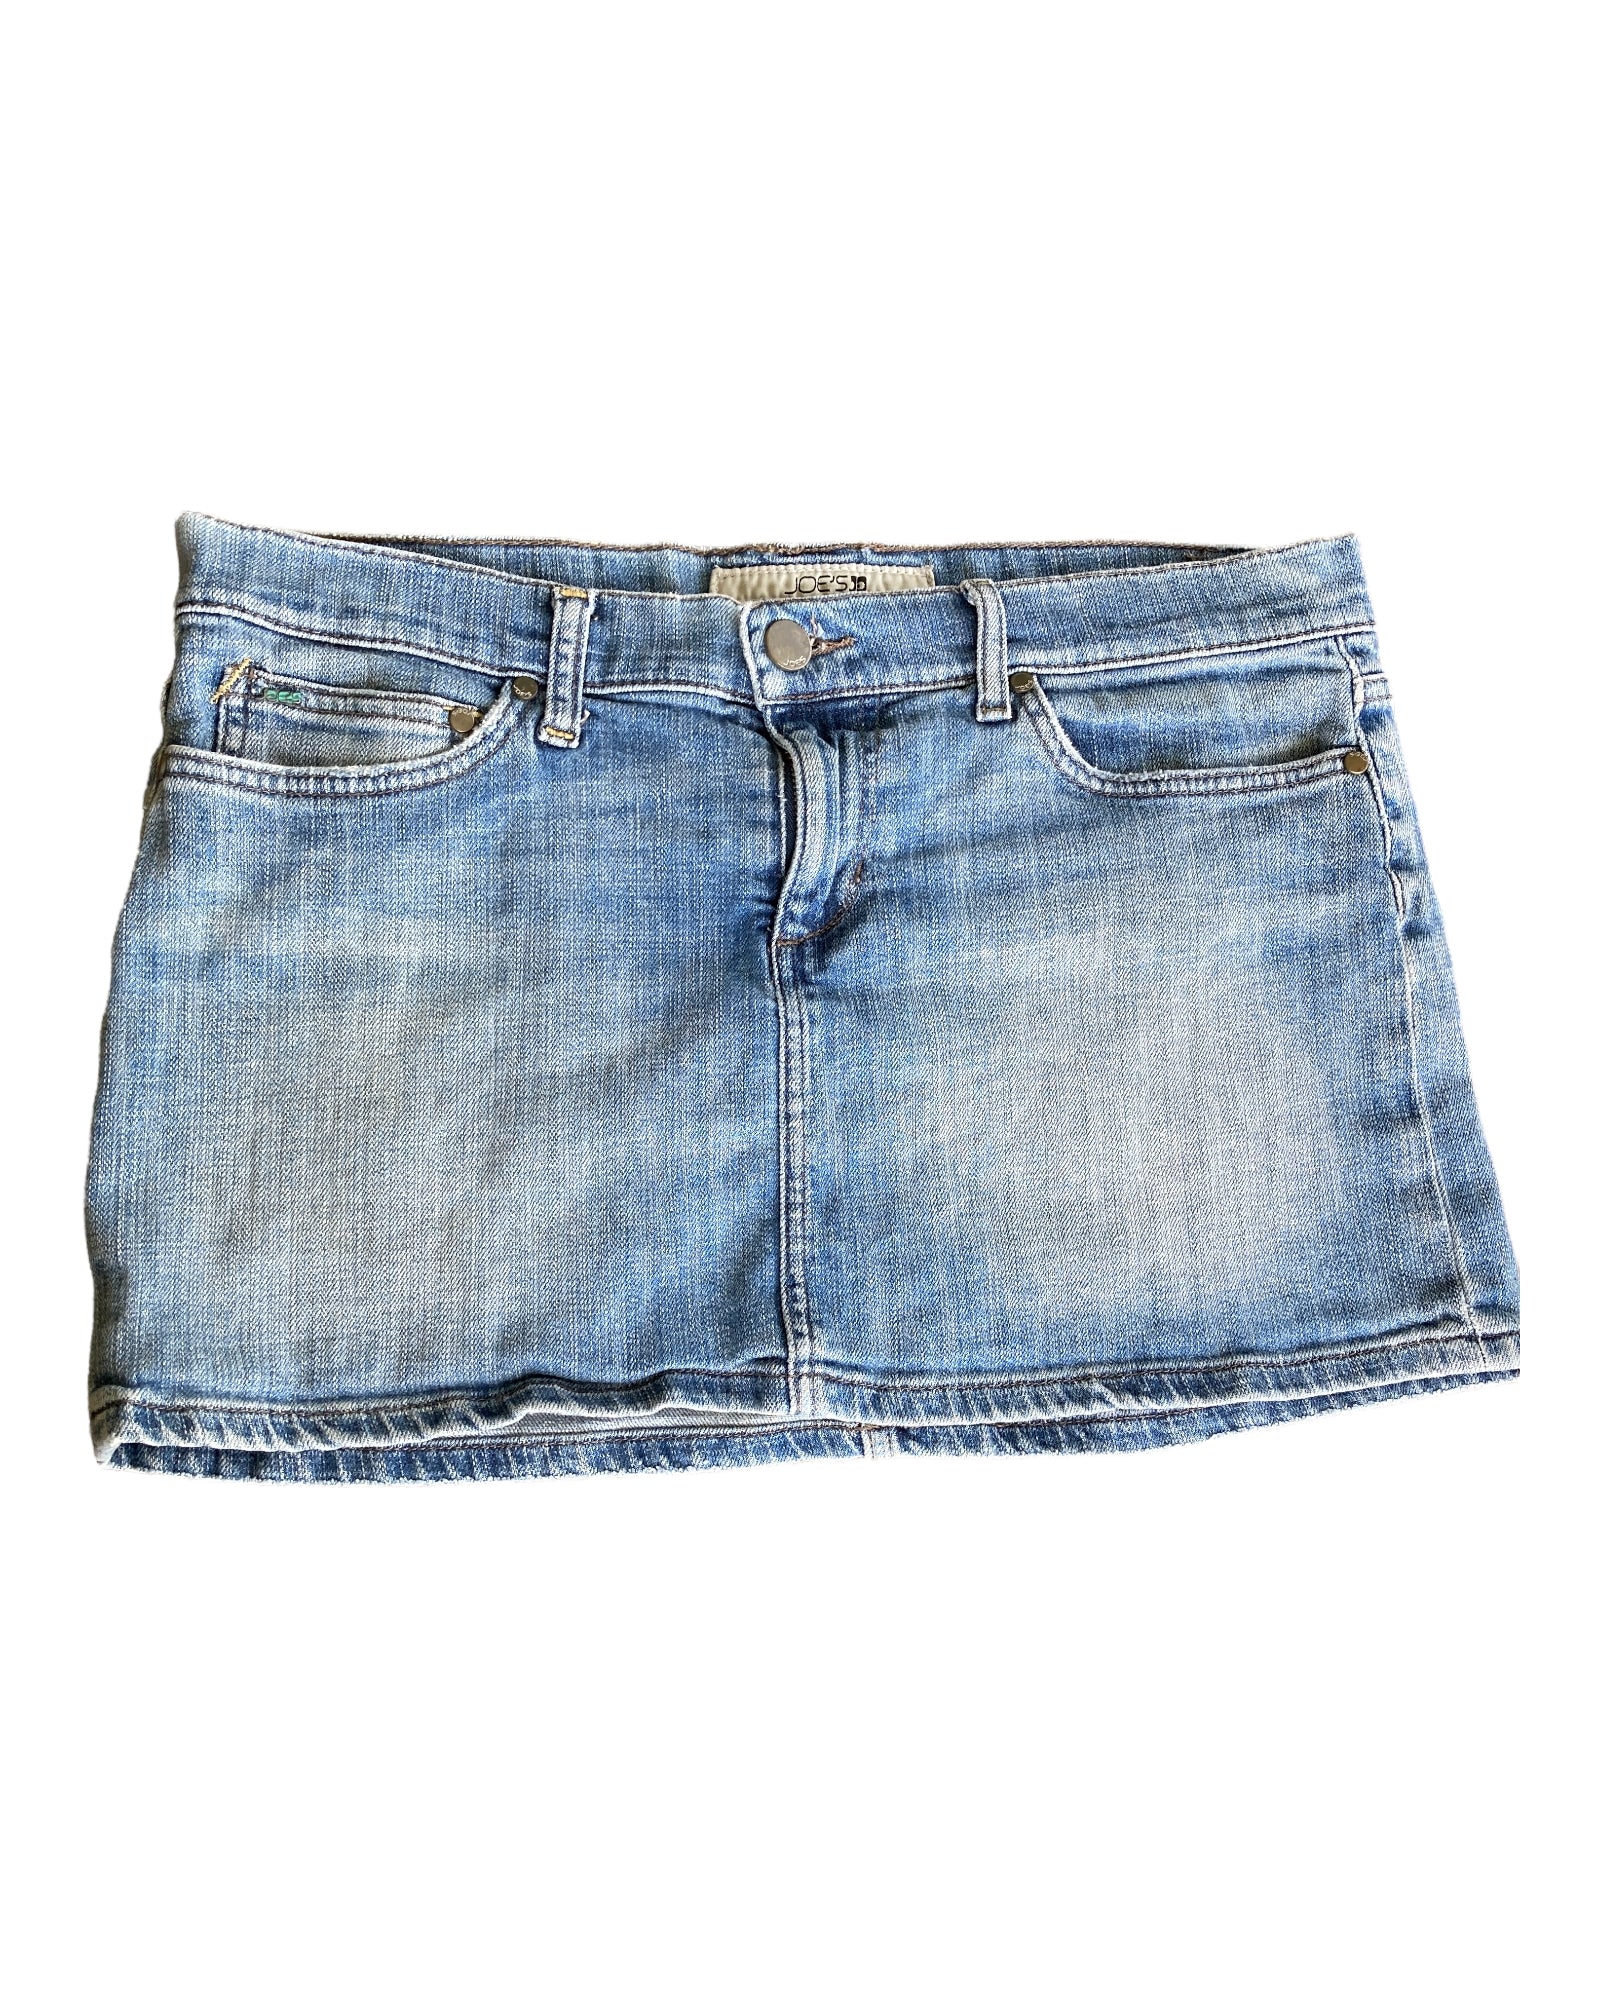 Joe's Jeans Jean Skirt, 35